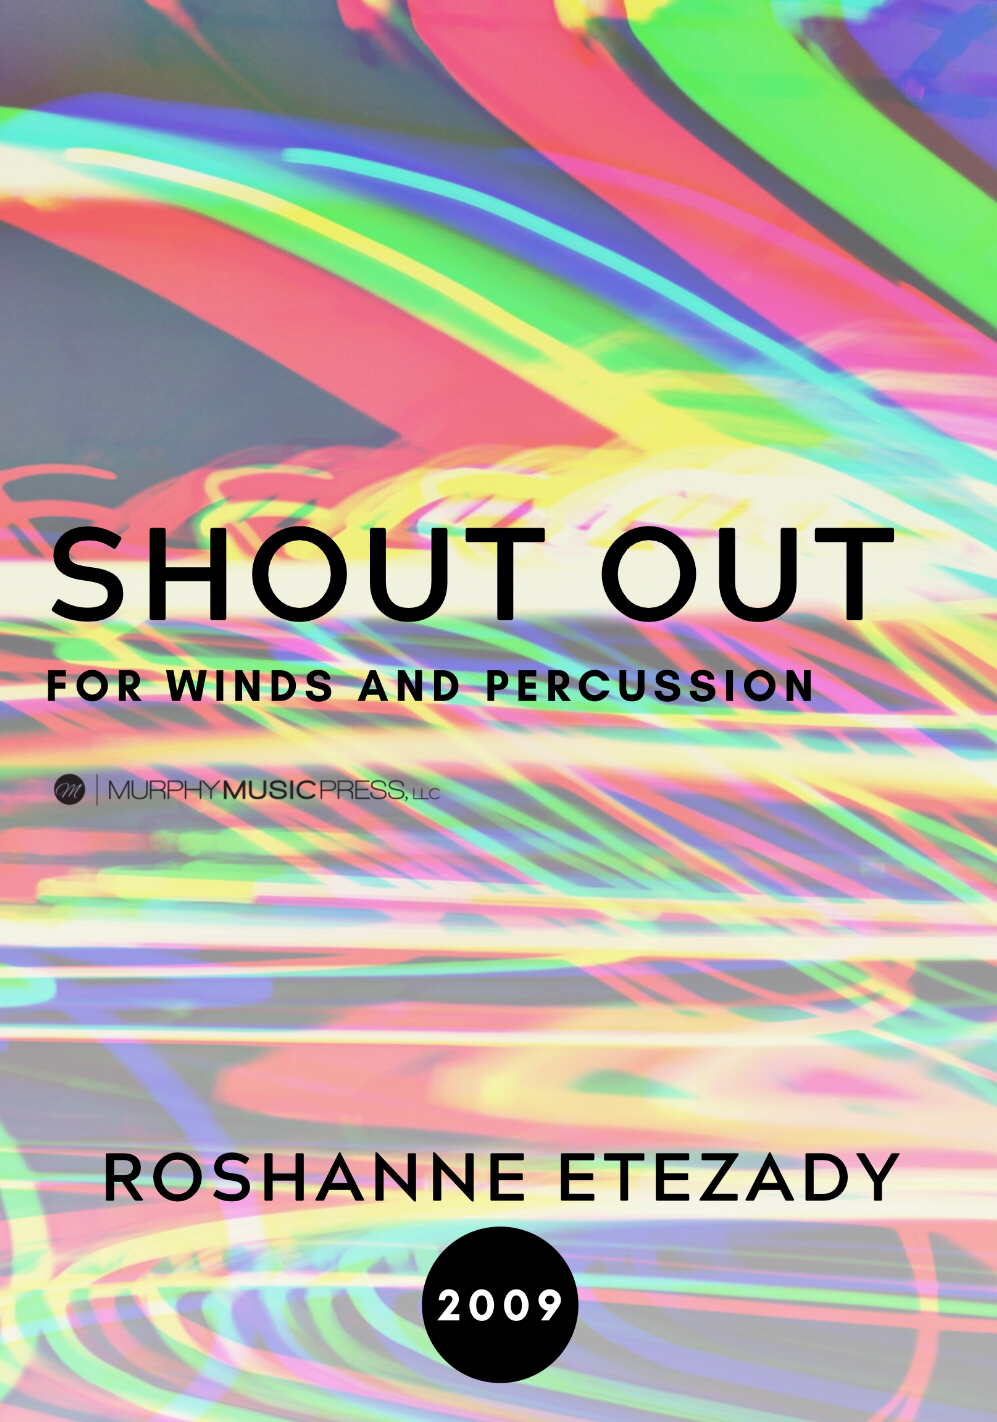 Shoutout by Roshanne Etezady